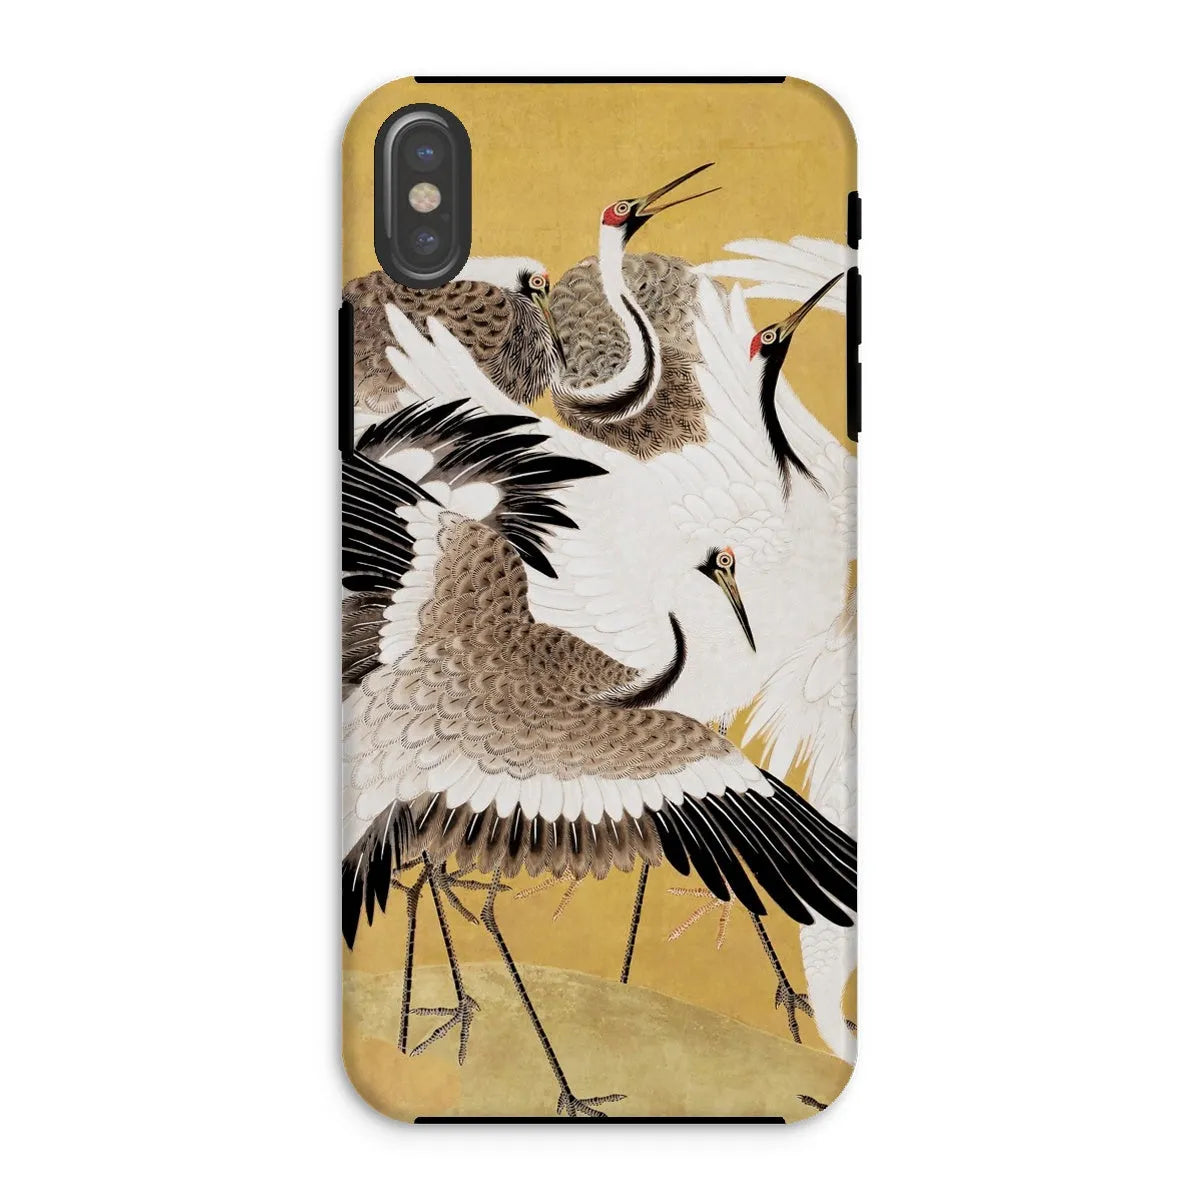 Flock Of Cranes Japanese Bird Art Phone Case - Ishida Yūtei - Iphone Xs / Matte - Mobile Phone Cases - Aesthetic Art